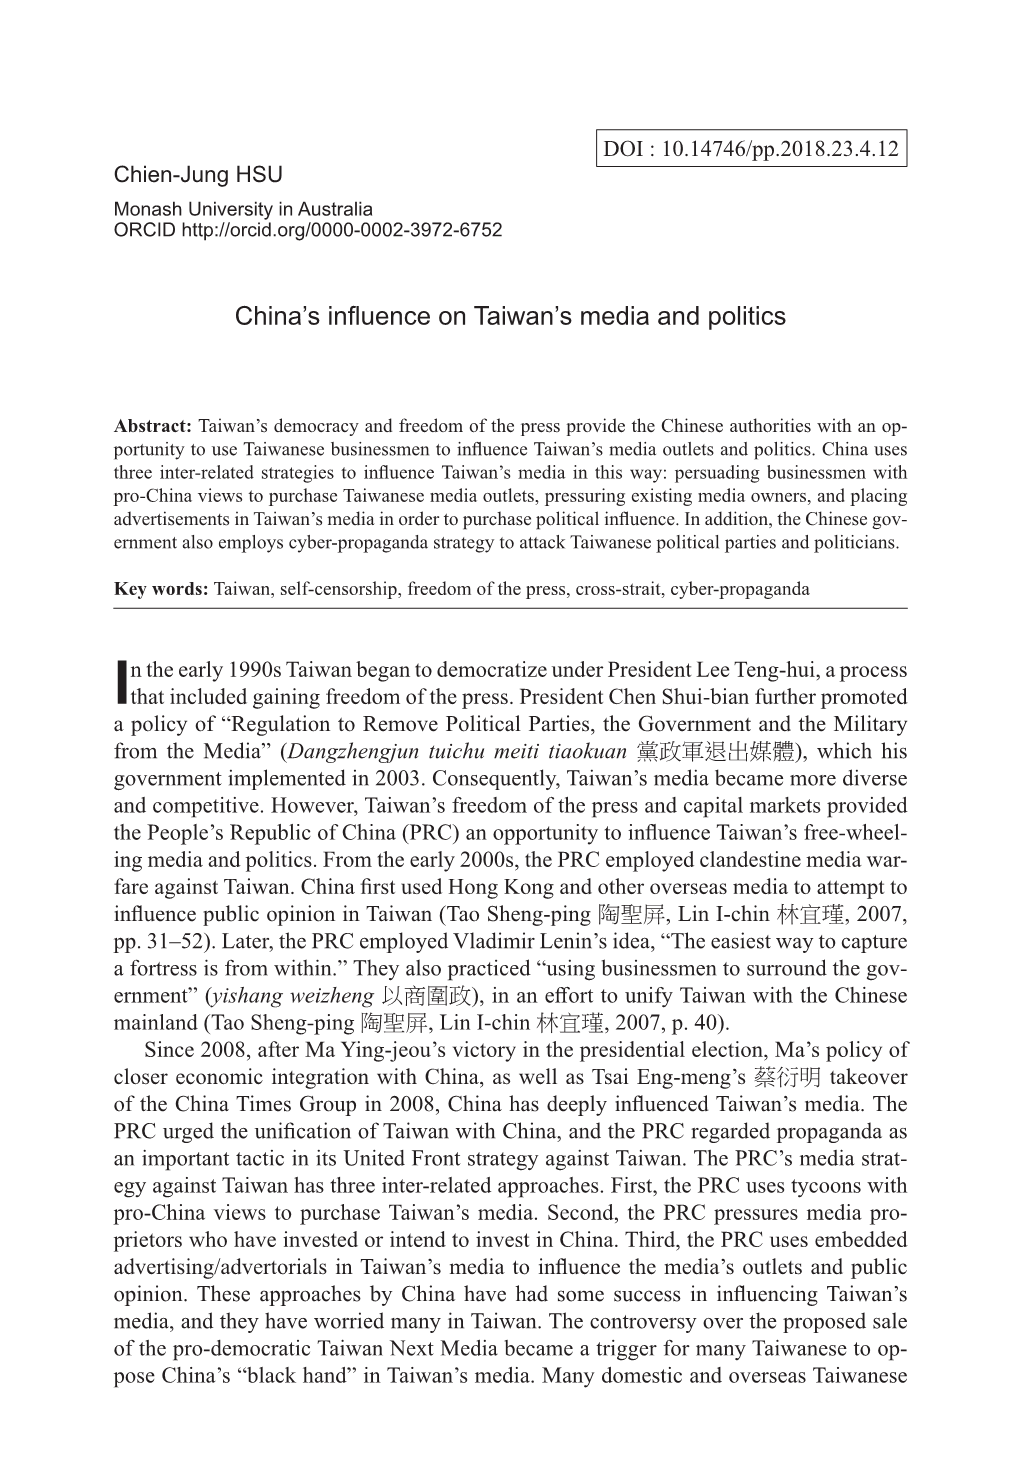 China's Influence on Taiwan's Media and Politics